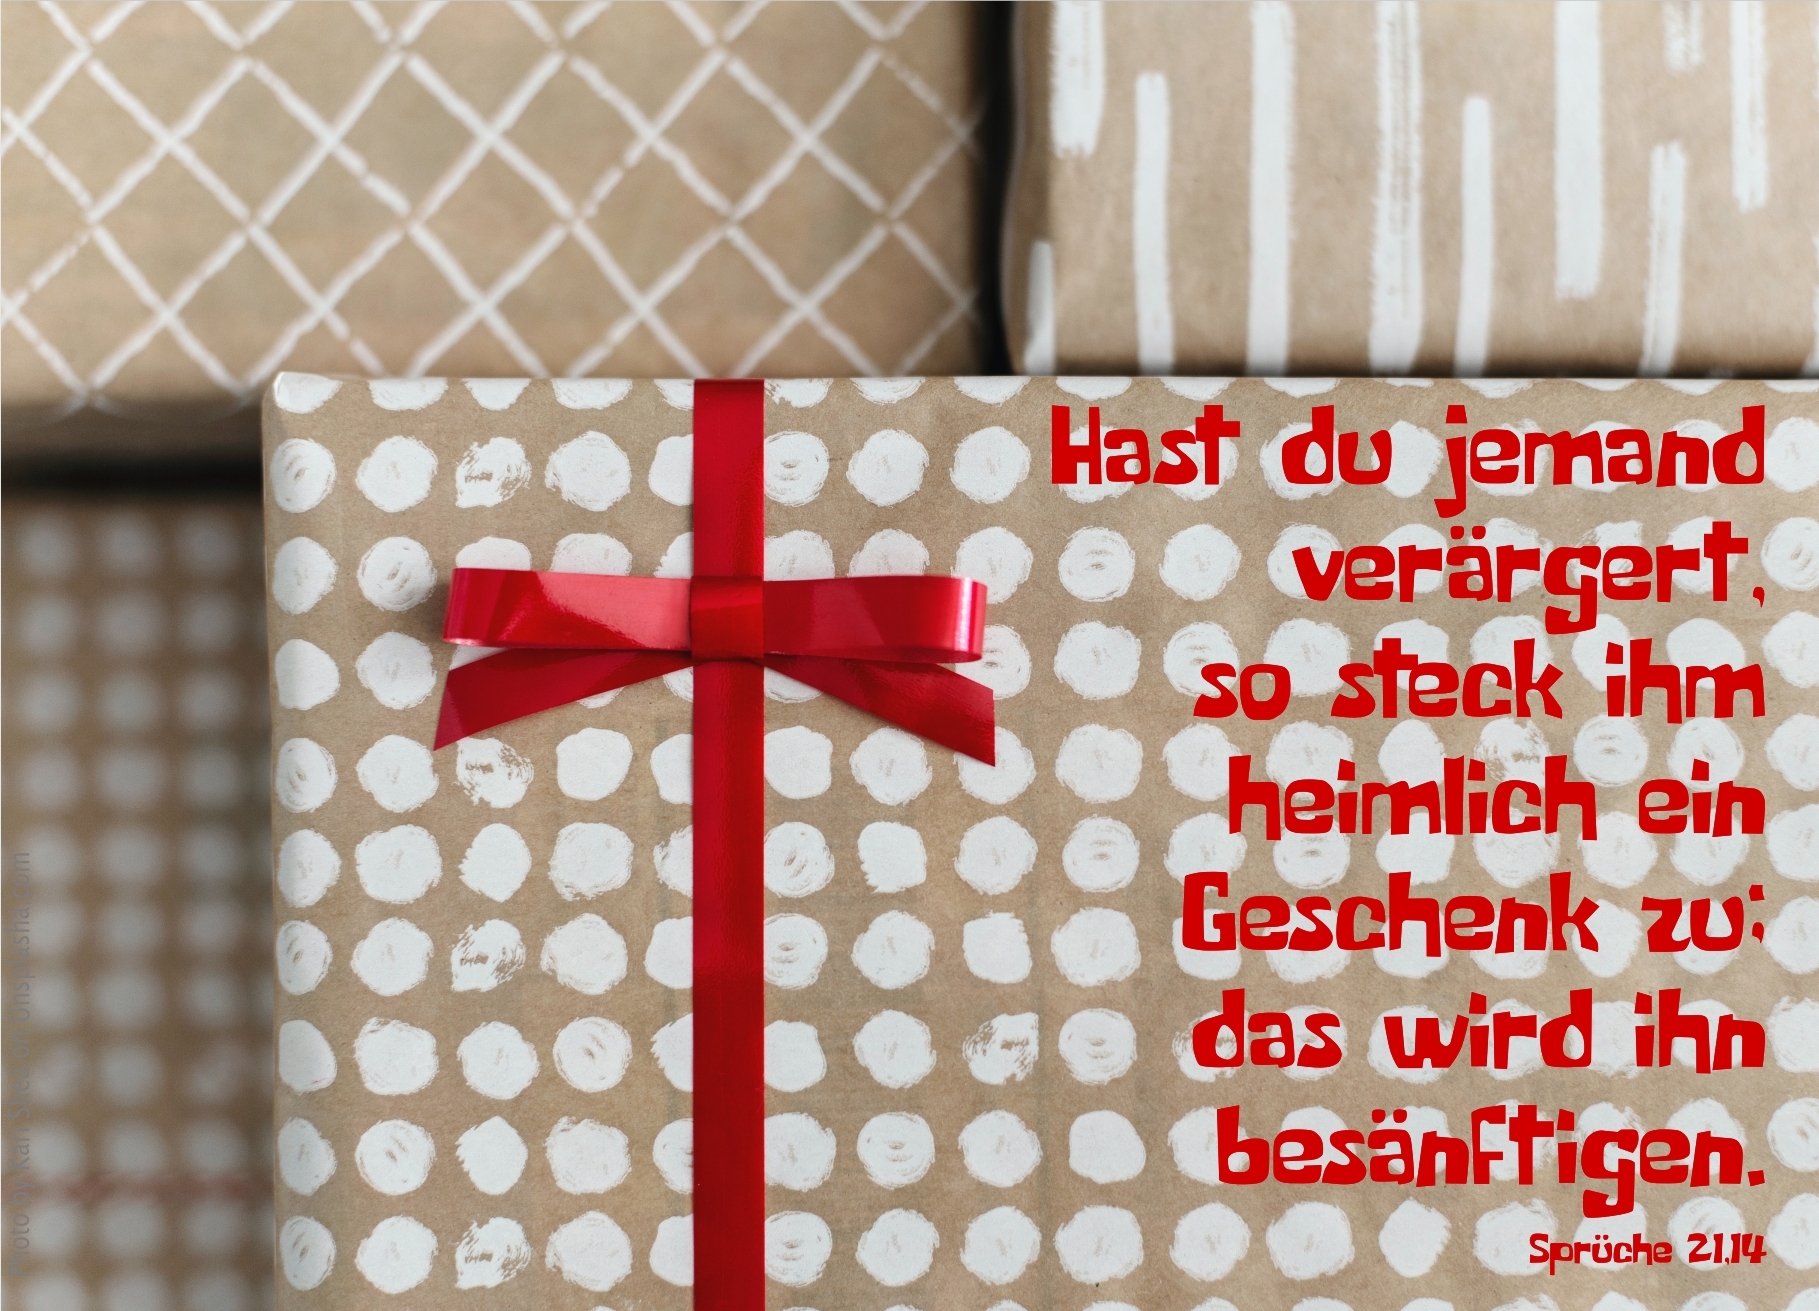 alt="verpackte_geschenke_erwartet_bibelhoerbuch_liebe_vor_freiheit"